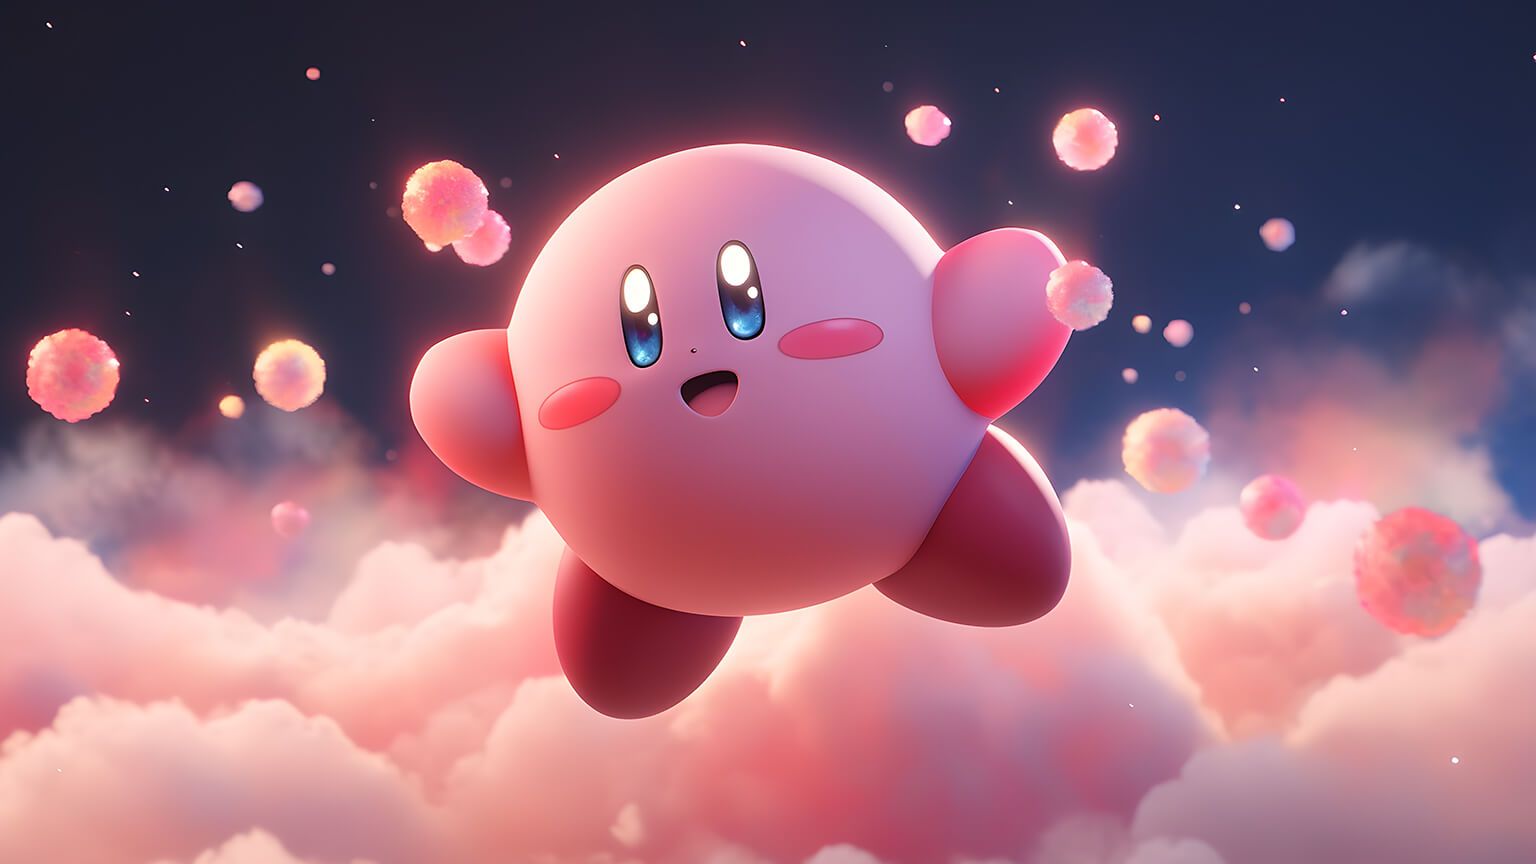 Cute Kirby & Clouds Desktop Wallpaper Wallpaper Desktop